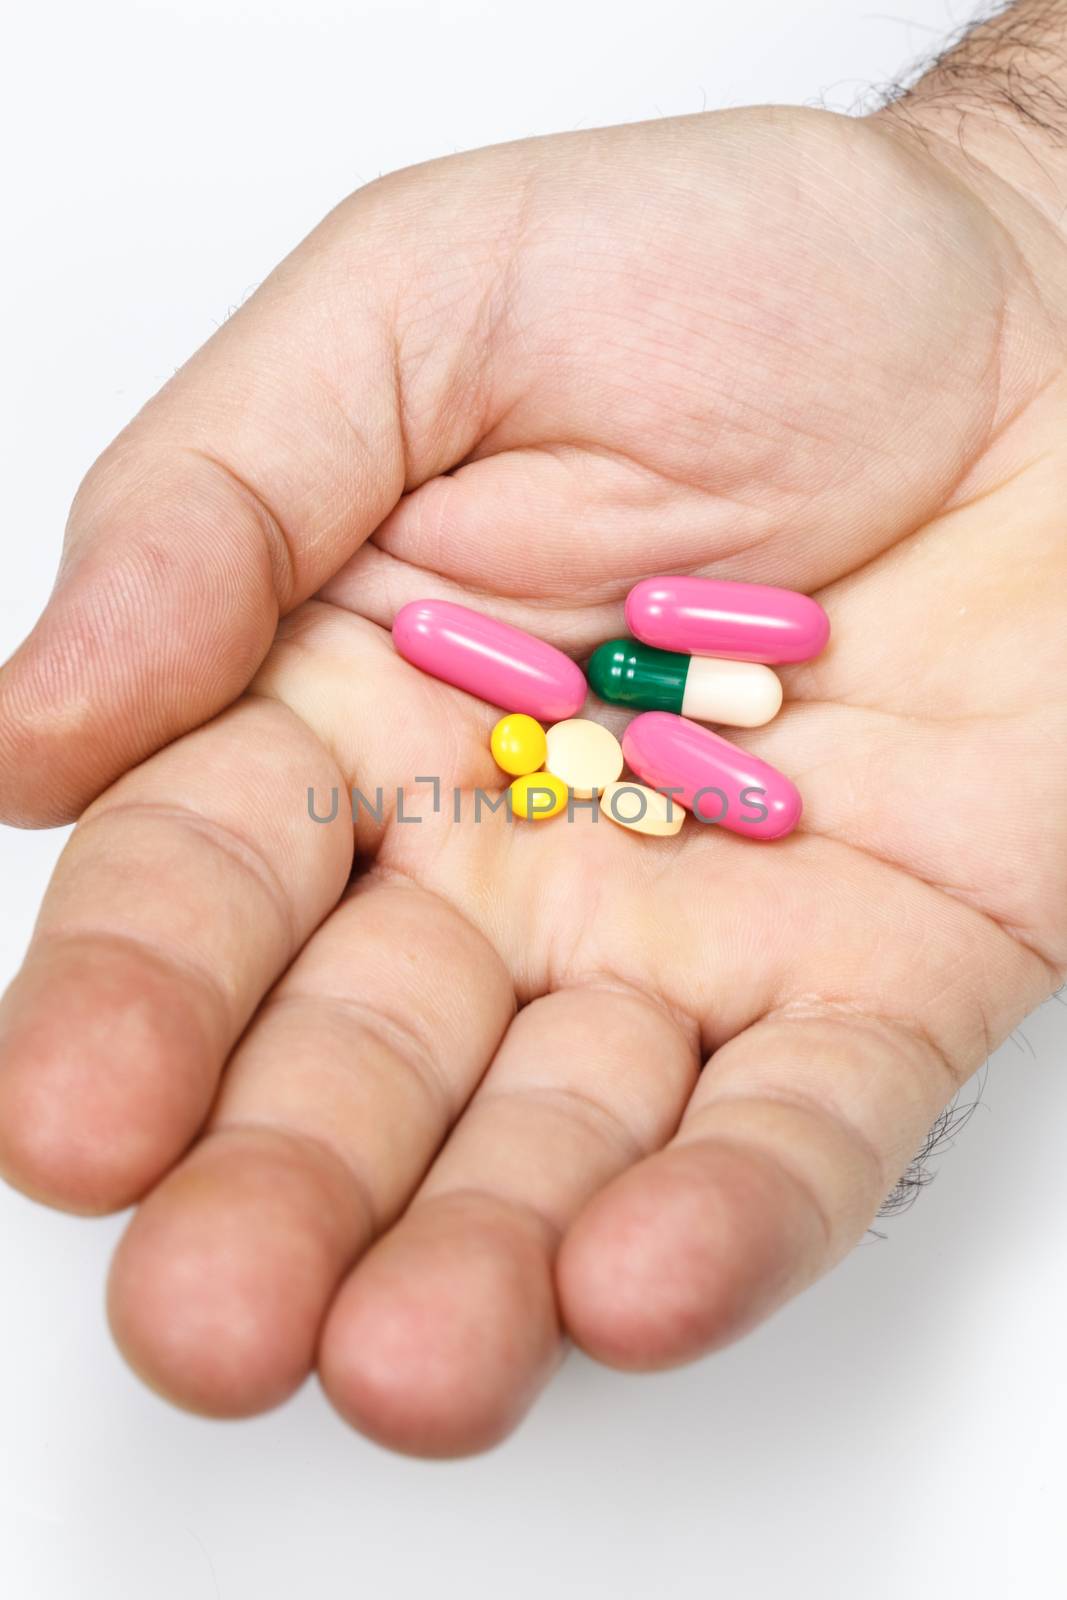 Handful of Medication, close up